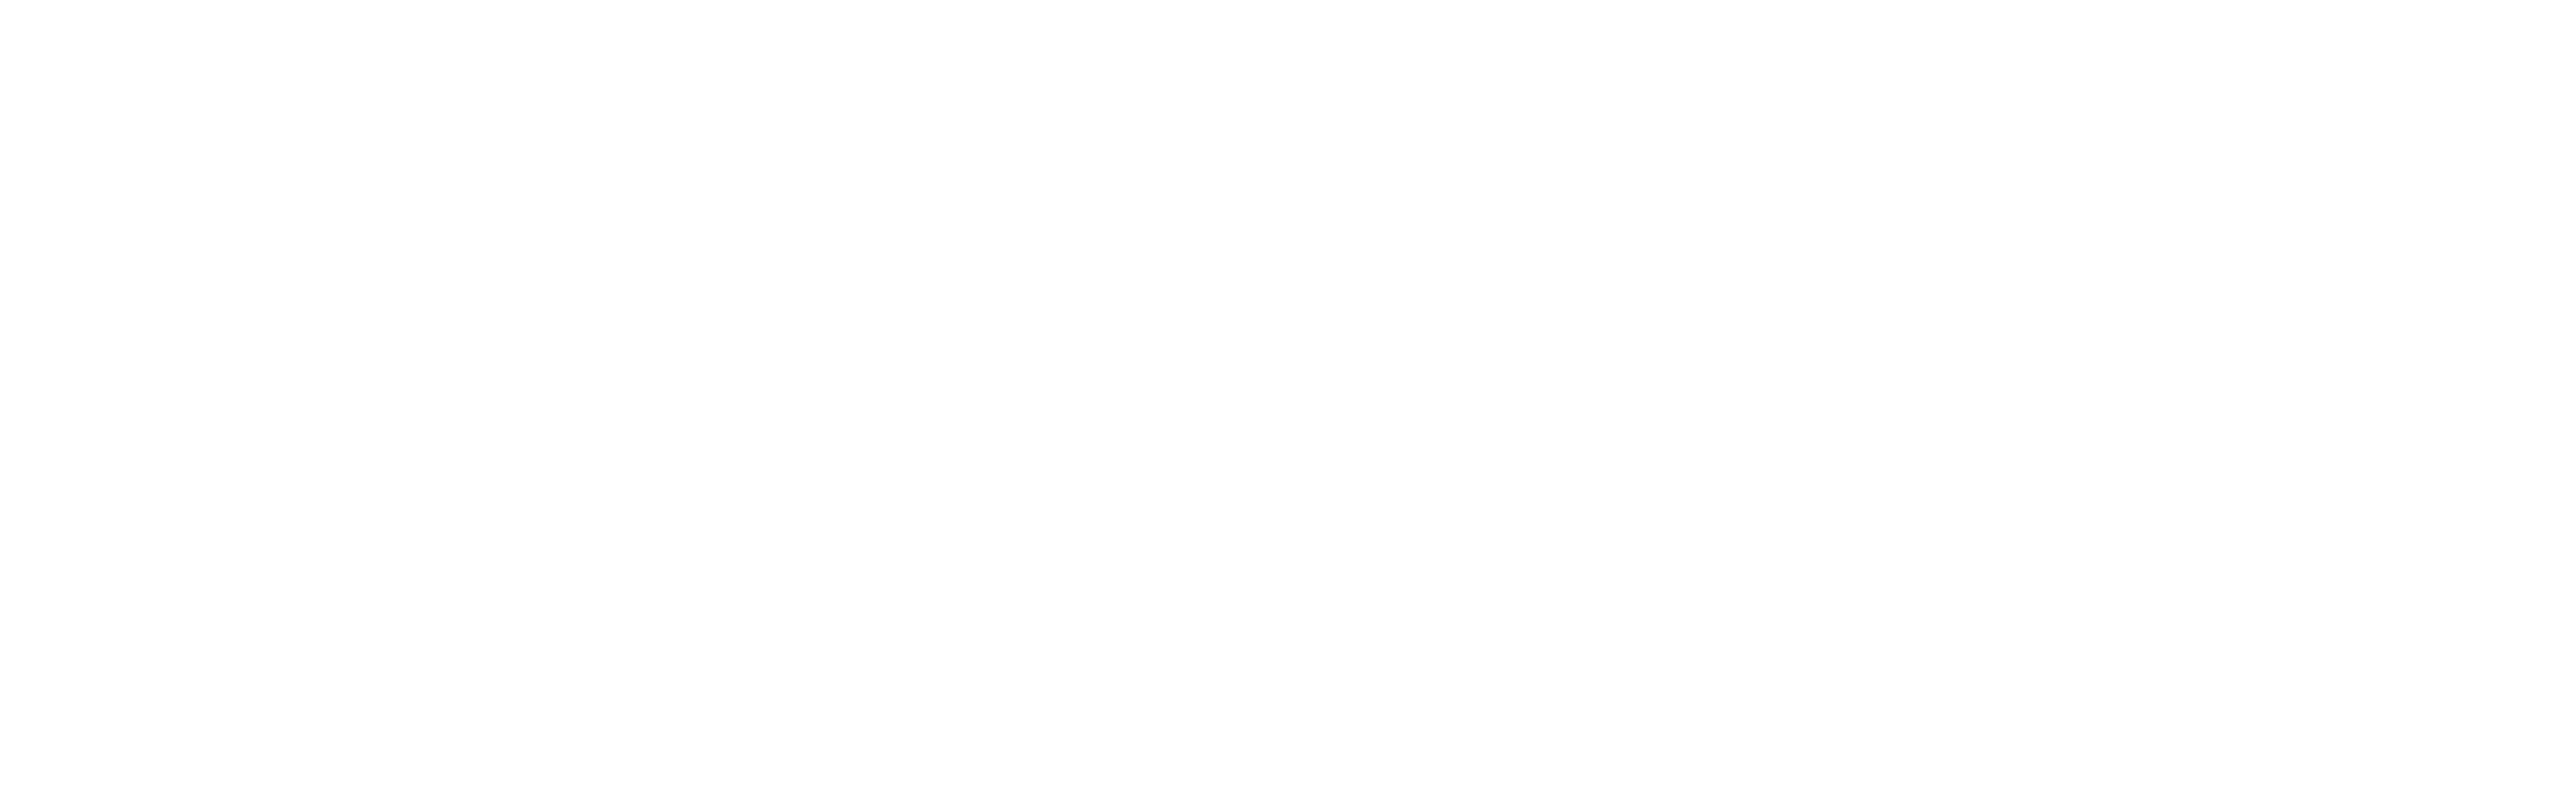 CrystalSound-logo-sidebar